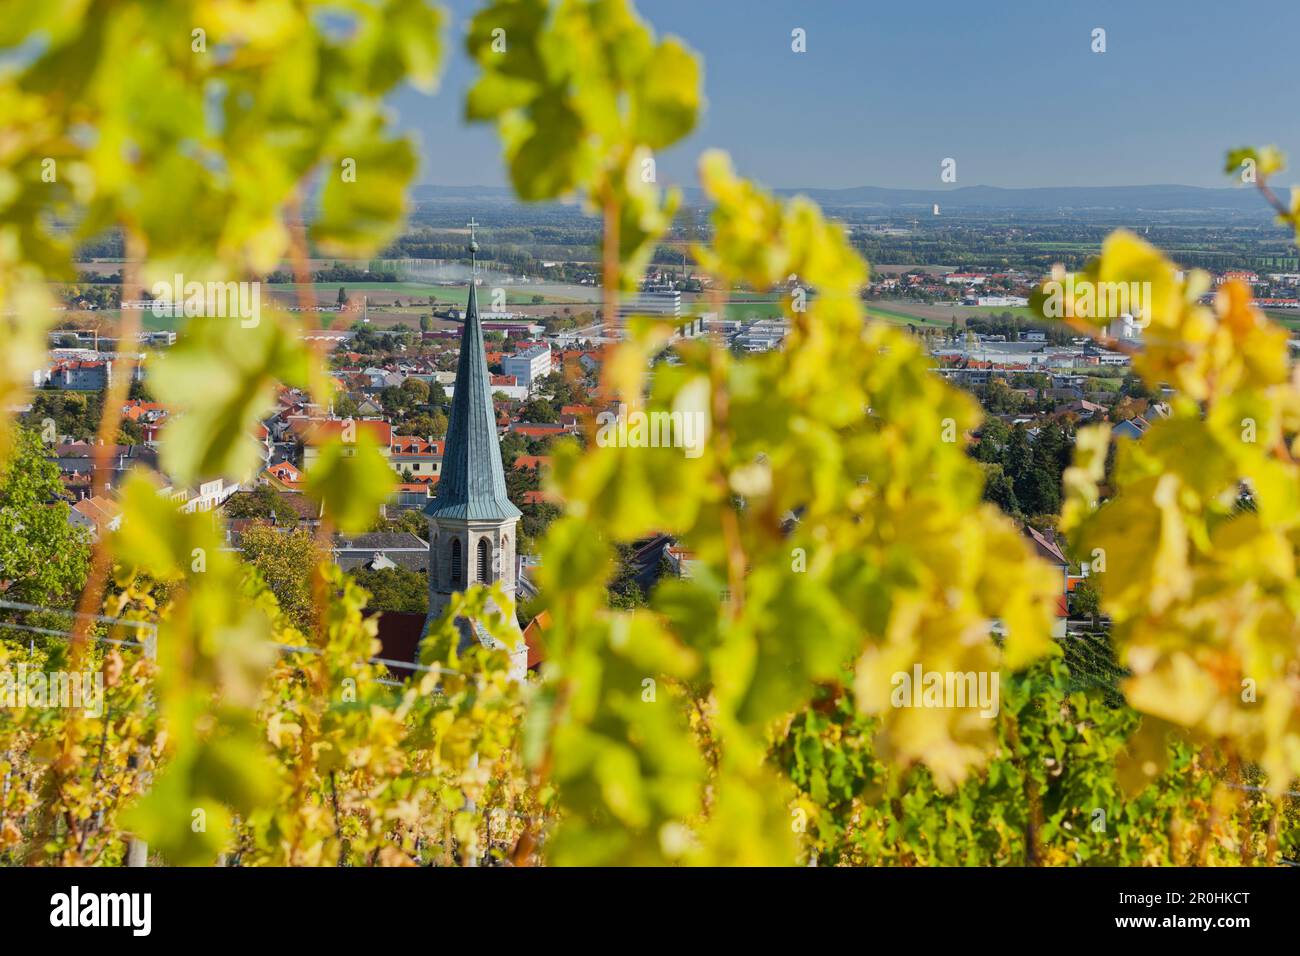 View of the church through vines, Thermenregion, Gumpoldskirchen, Lower Austria, Austria Stock Photo